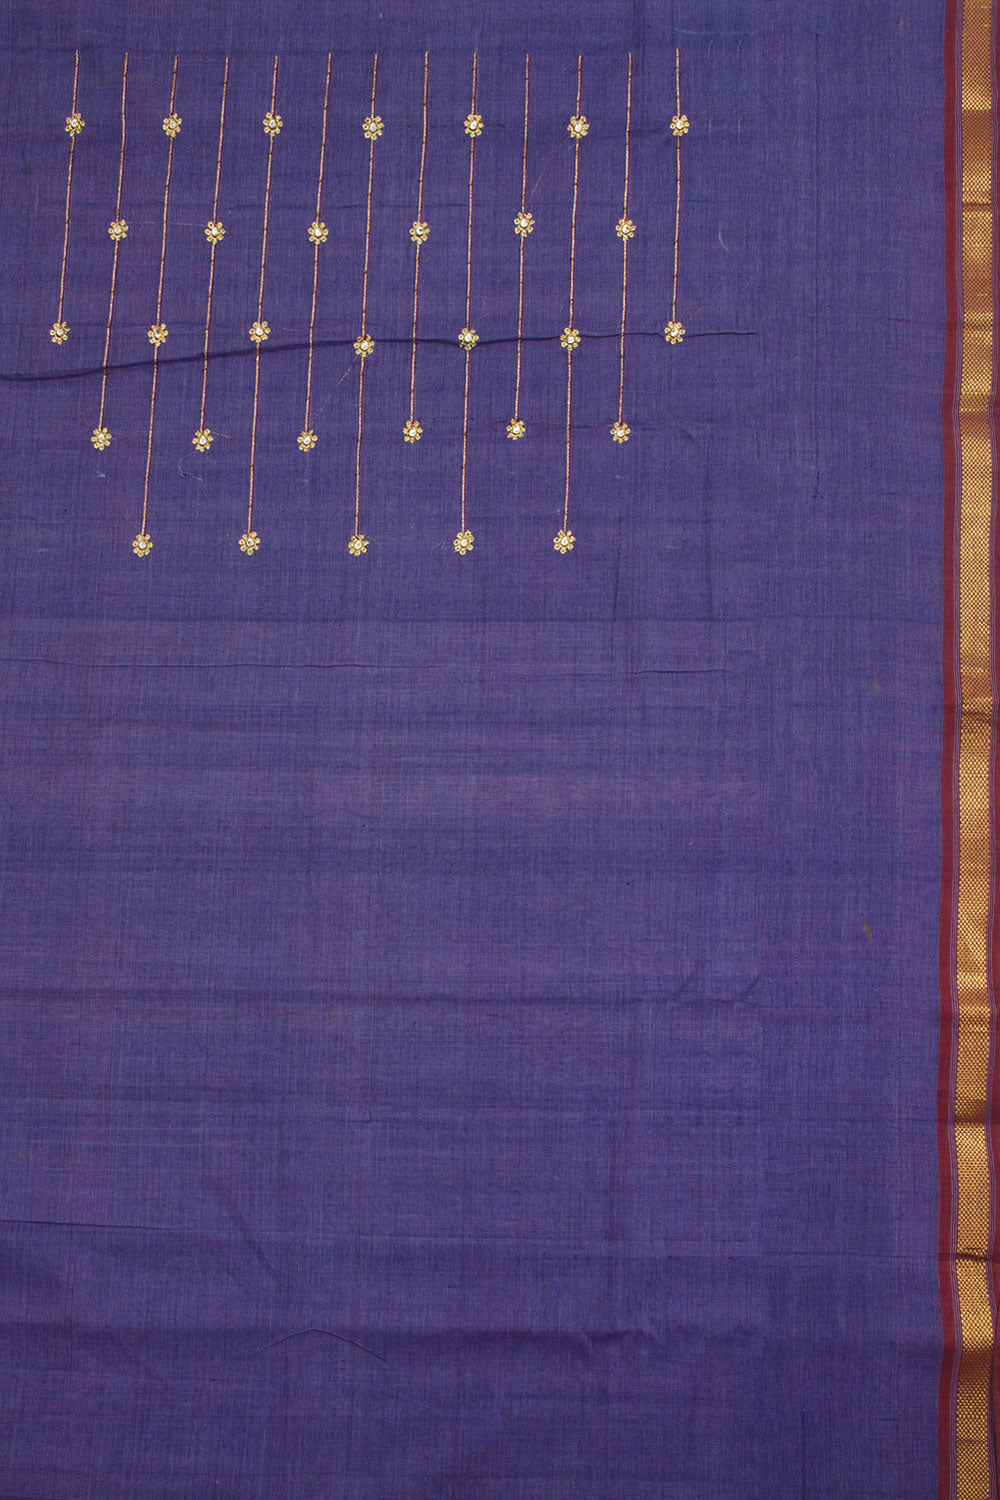 Dark Lavender Aari Embroidered Mangalgiri Cotton Blouse Material 10062432